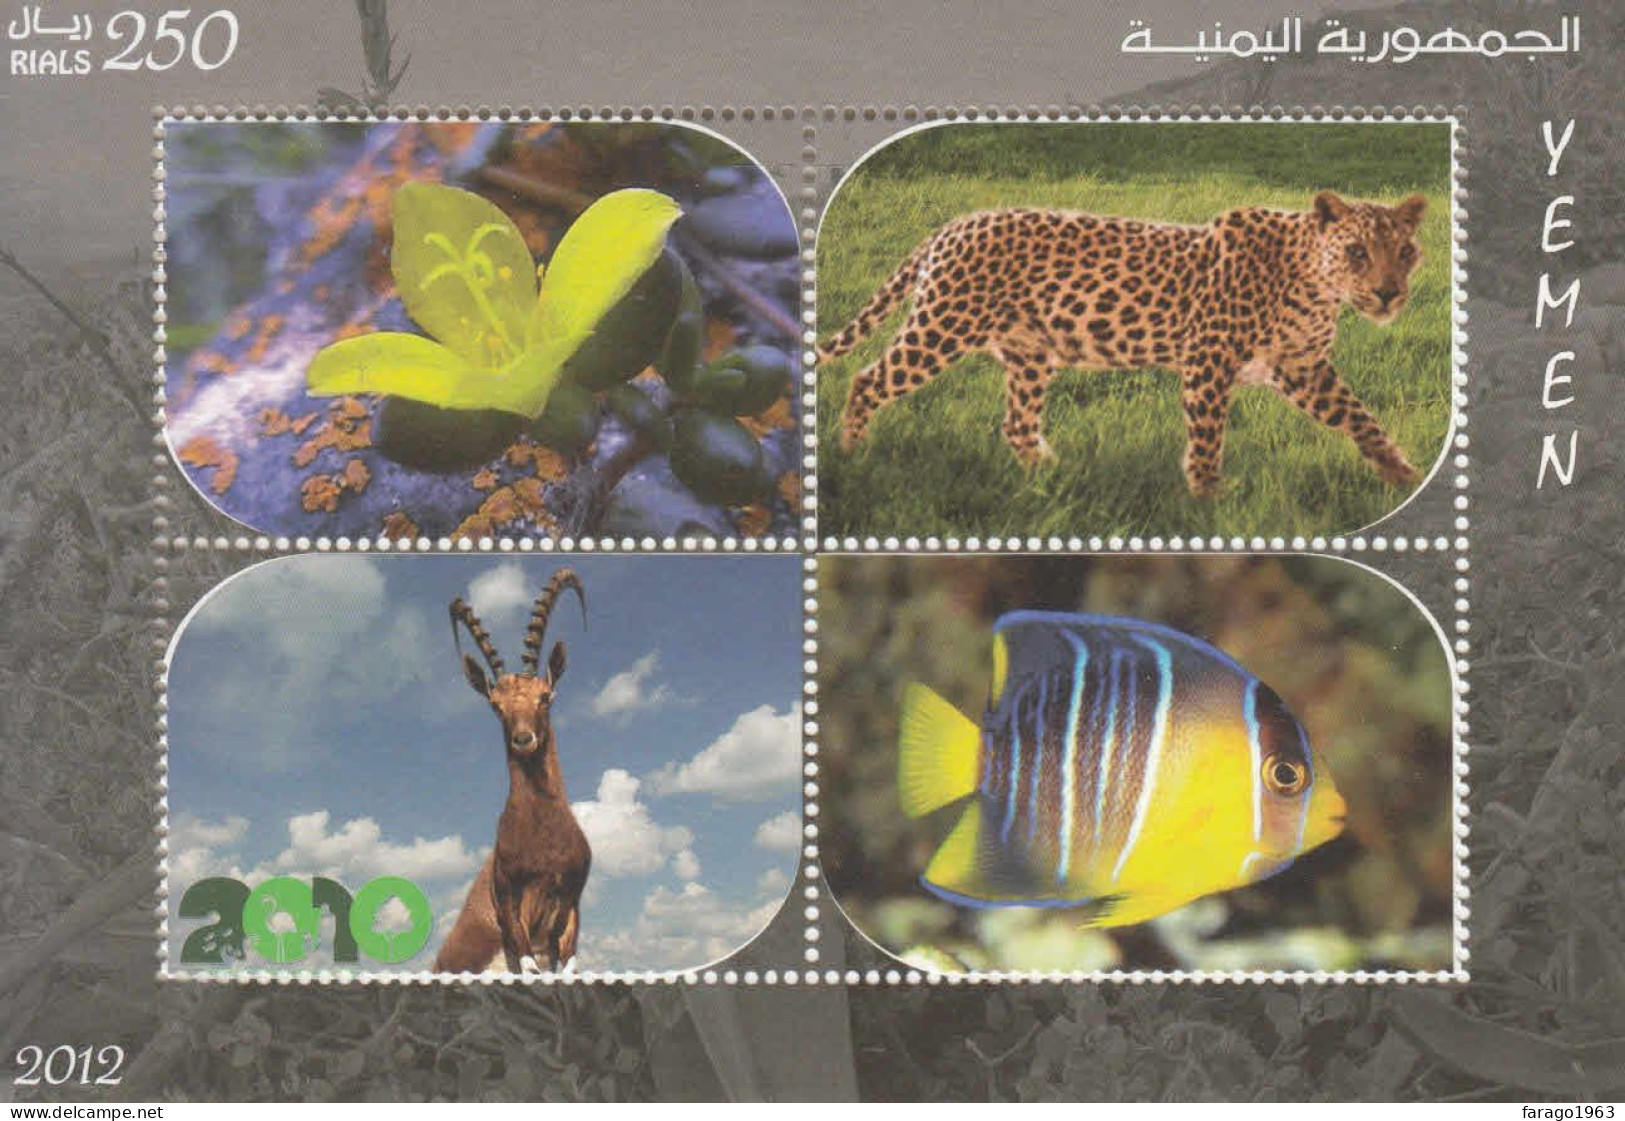 2012 2013 Yemen Biodiversity Leopard Cats Fish Flowers Souvenir Sheet Of 4 MNH - Yemen